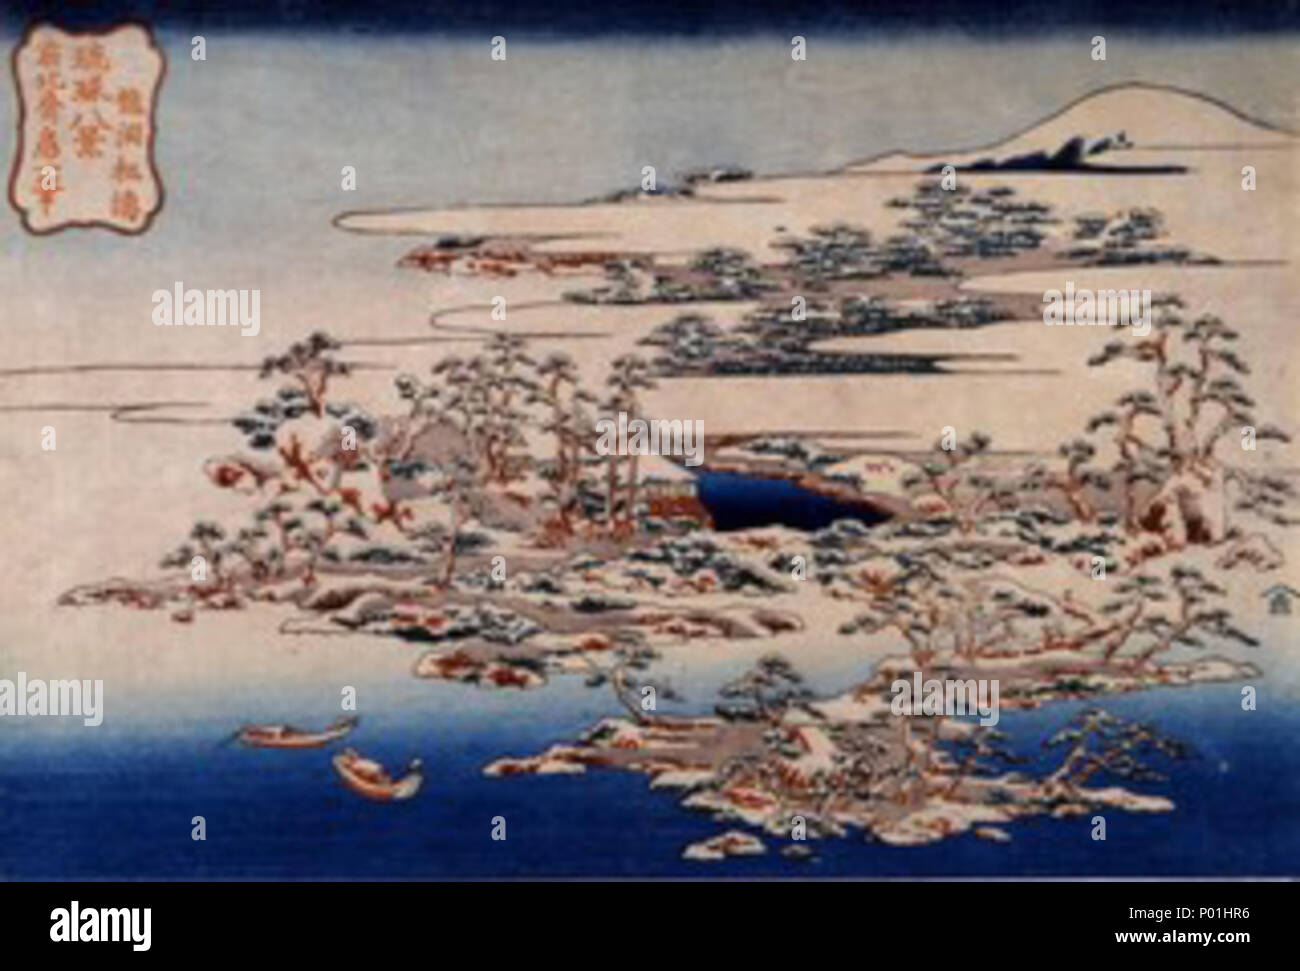 . Inglese: pini e le onde a Ryudo (Dragon Cavern) da otto viste delle isole Ryūkyū, da Hokusai, Urasoe Art Museum, Urasoe, Okinawa, in Giappone 日本語: 琉球八景 龍洞松濤 . circa 1832. Hokusai (1760-1849) 8 otto viste delle isole Ryukyu da Hokusai (Urasoe Museo d'Arte) - pini e le onde a Ryudo Foto Stock